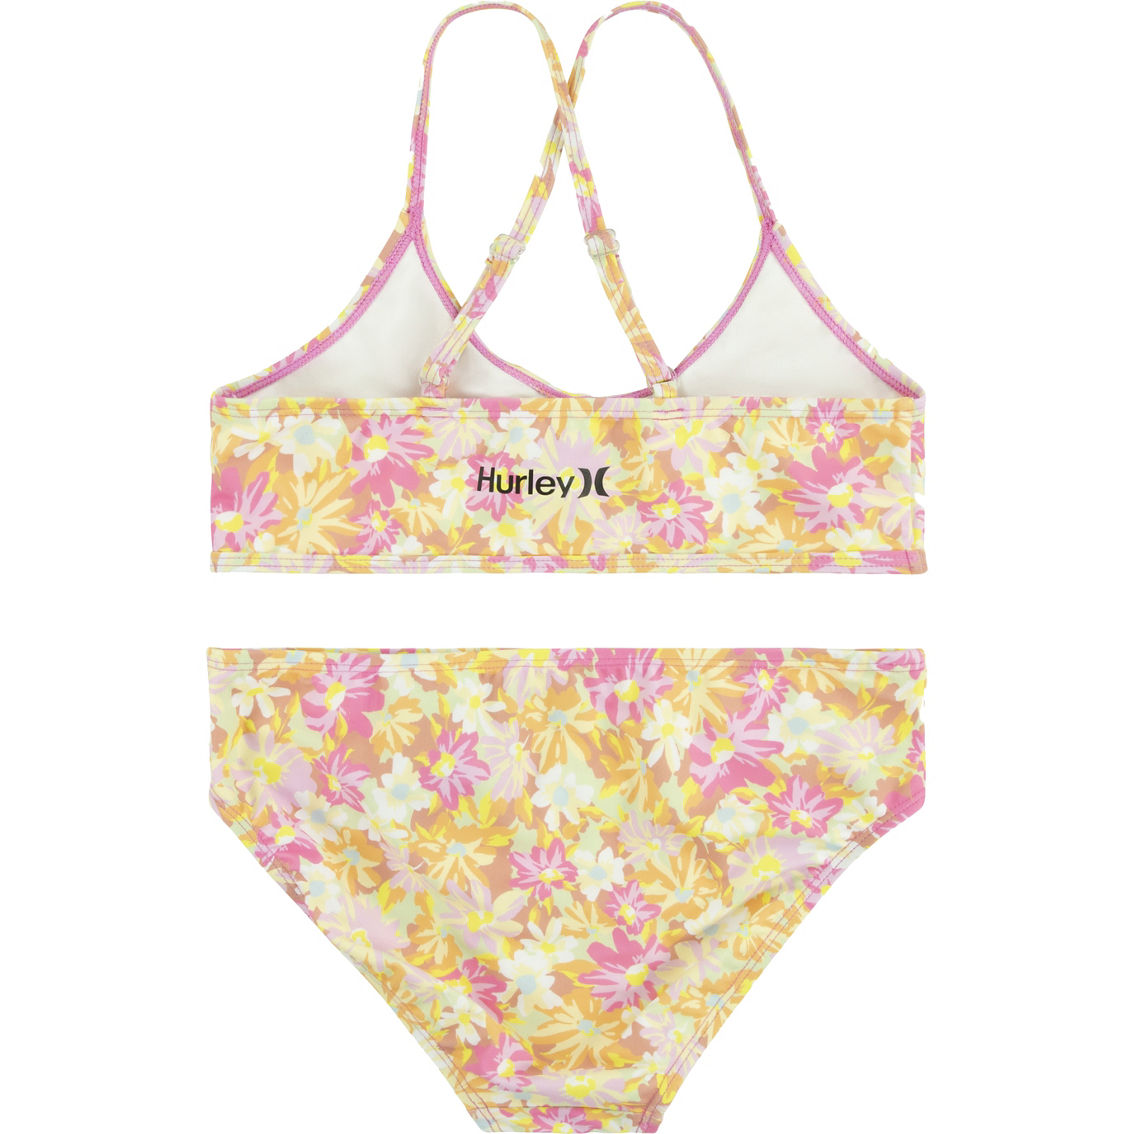 Hurley Girls Triangle Bikini 2 pc. Swimsuit - Image 2 of 5